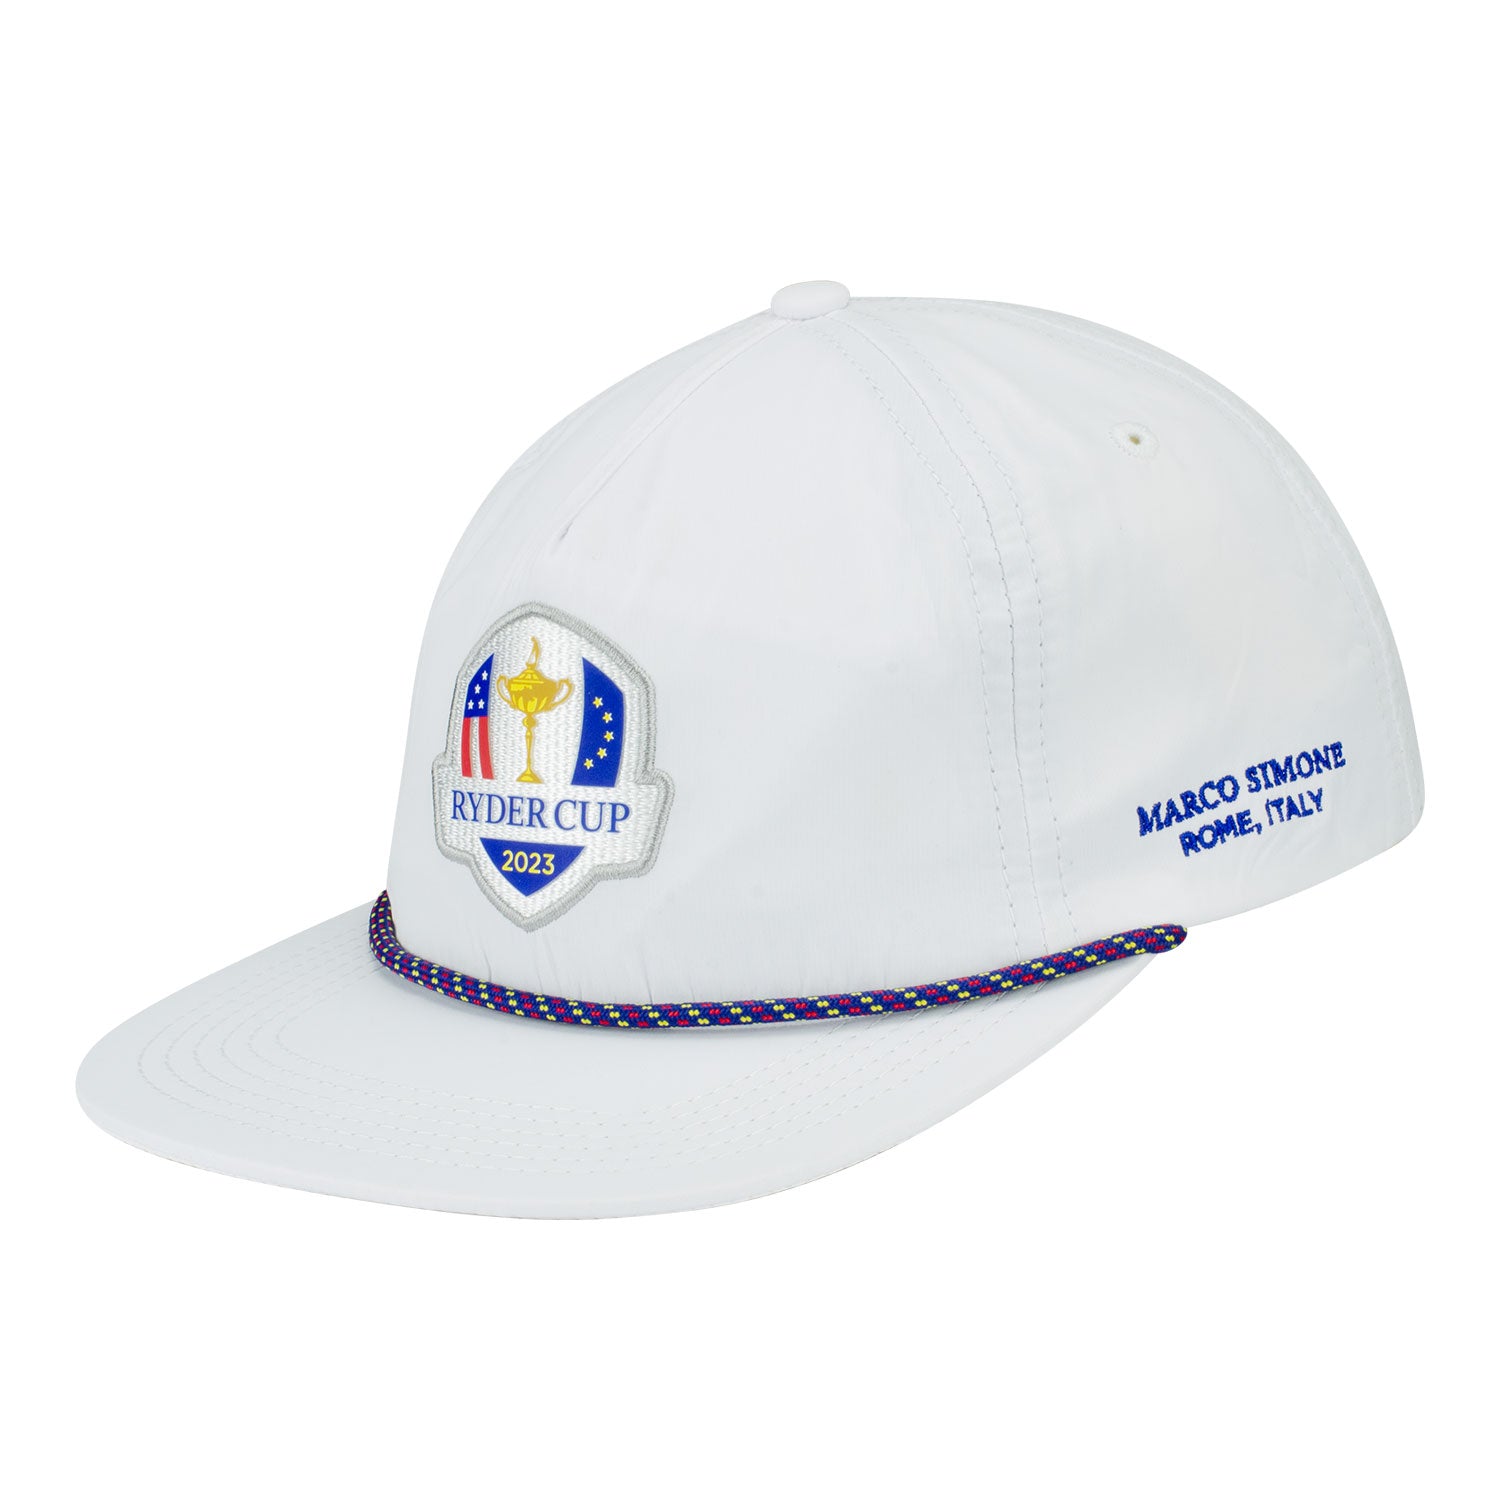 Barstool Sports Merch on X: Barstool Logo / 47 Brand Hat